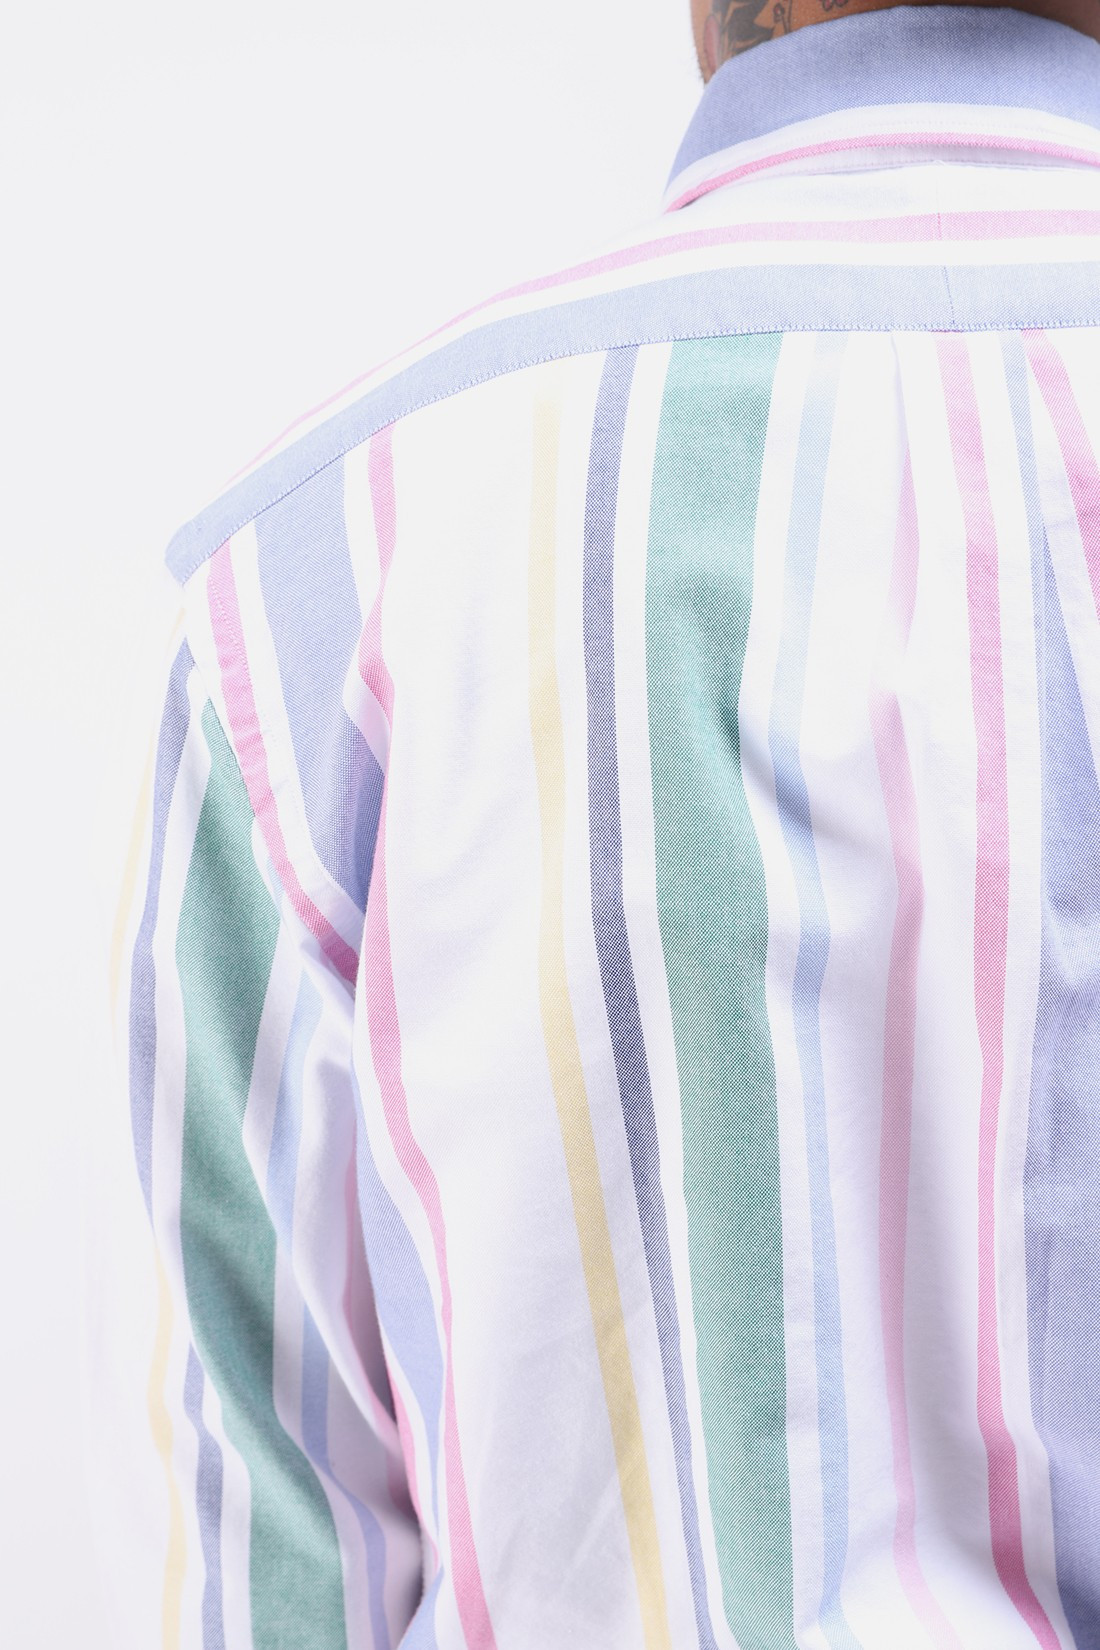 POLO RALPH LAUREN / Custom fit oxford shirt stripe Multi